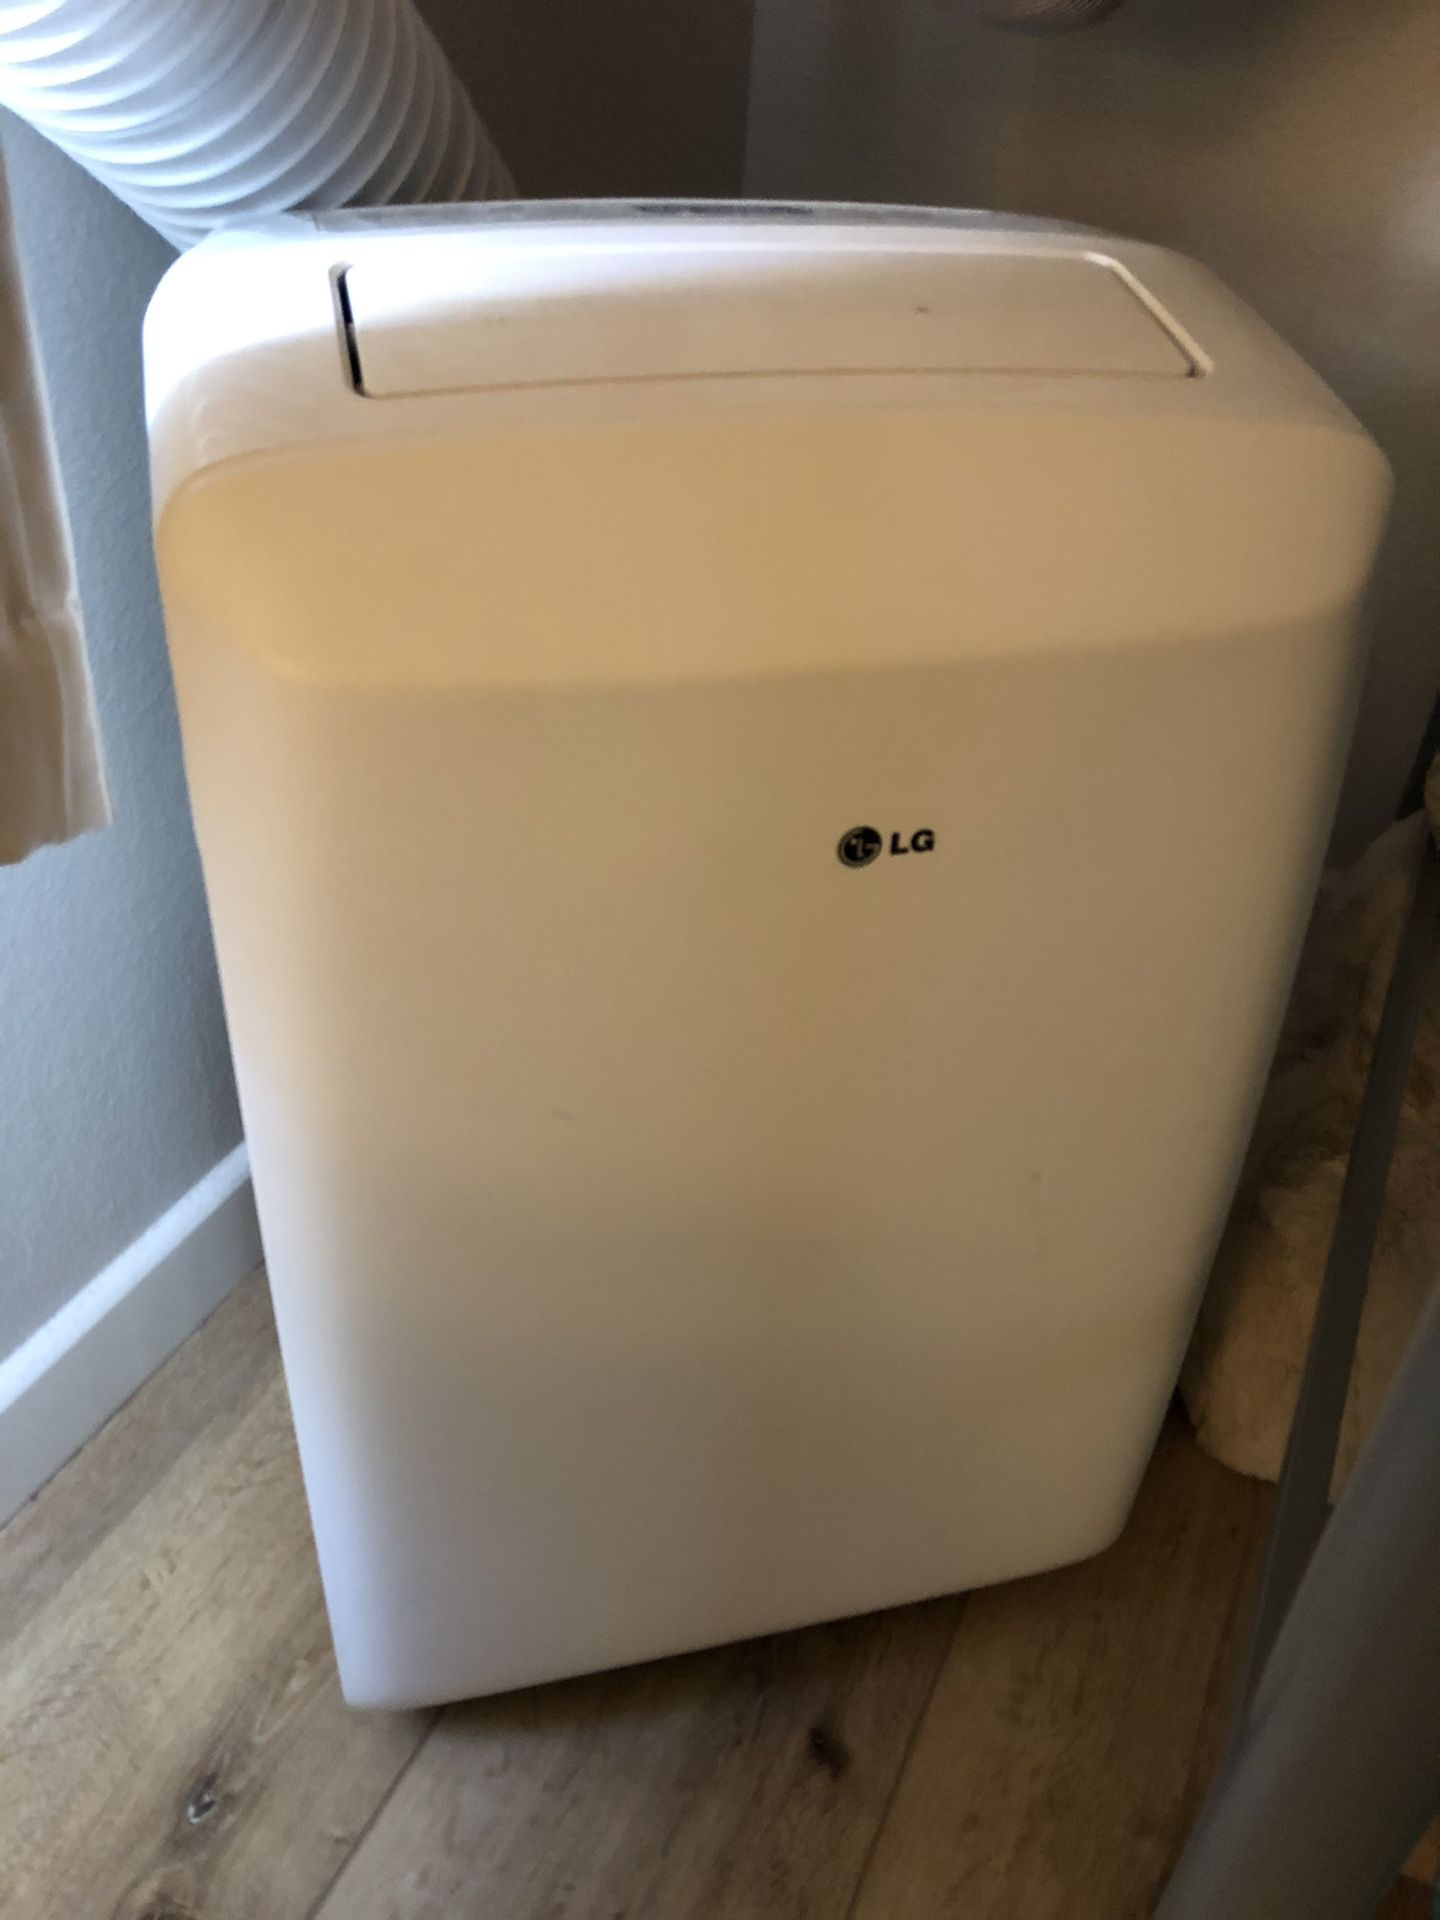 LG Air Conditioner/Dehumidifier